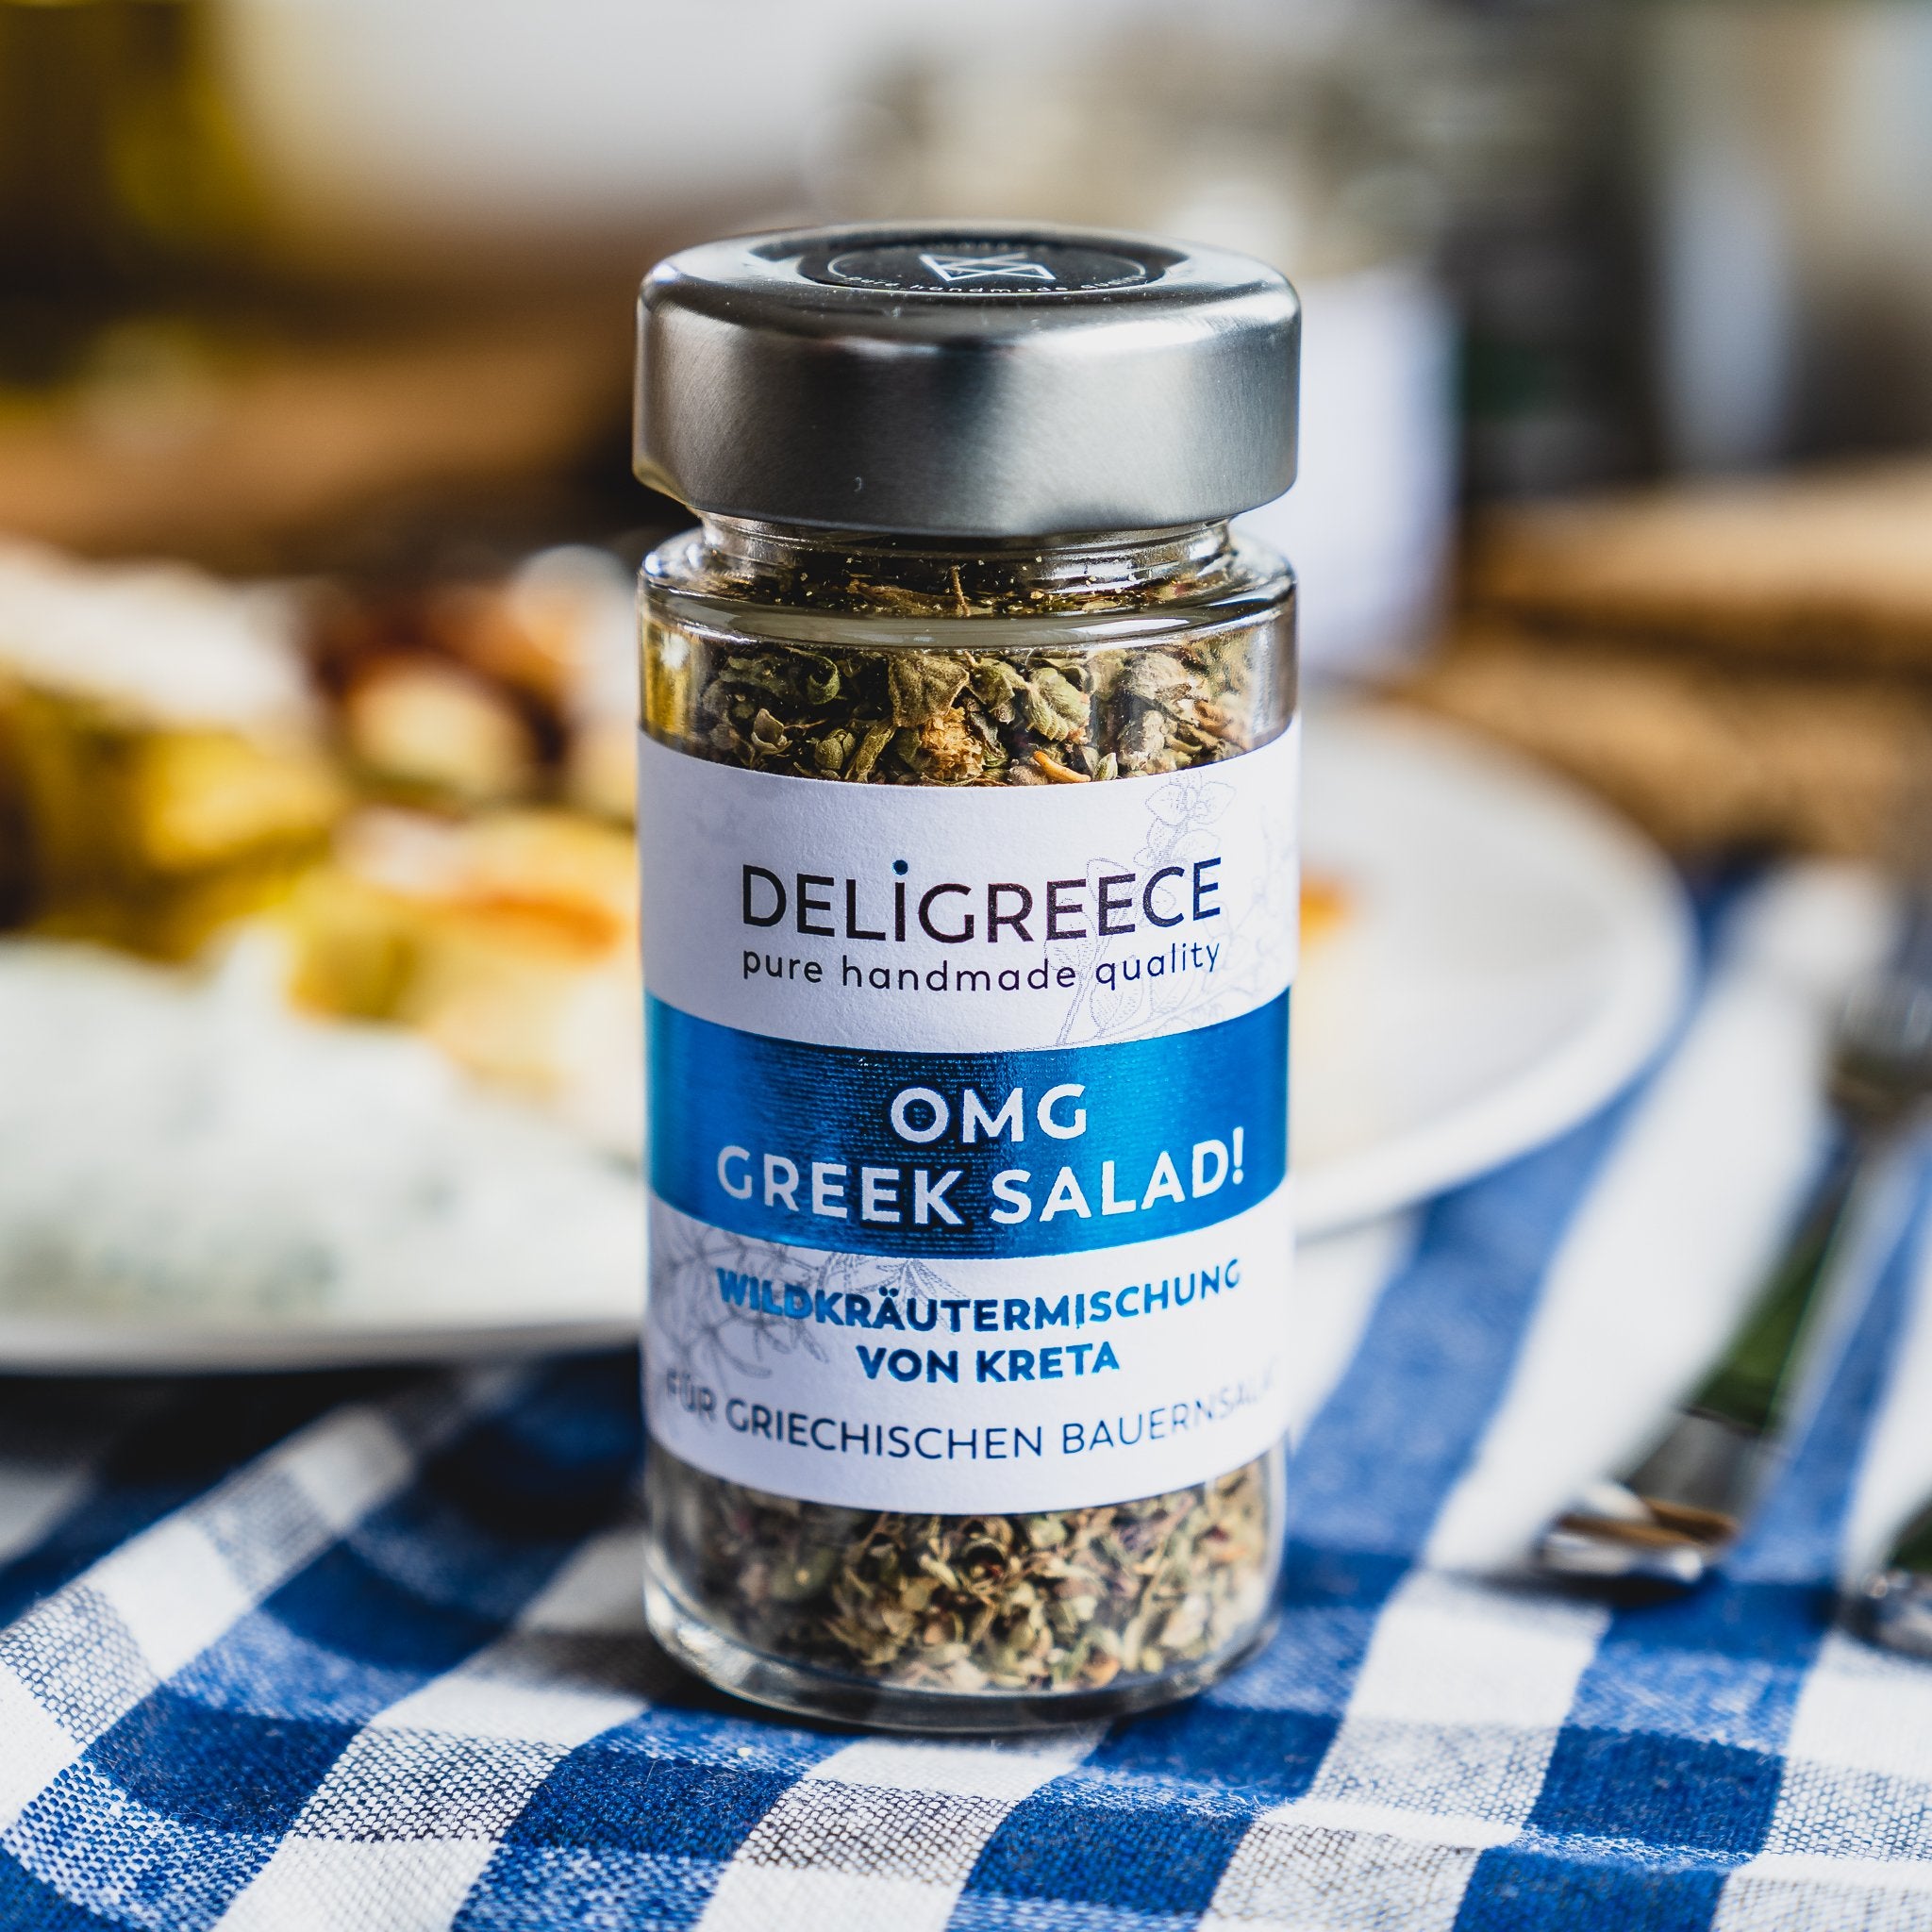 Deligreece Wildkräutermischung OMG Greek Salad